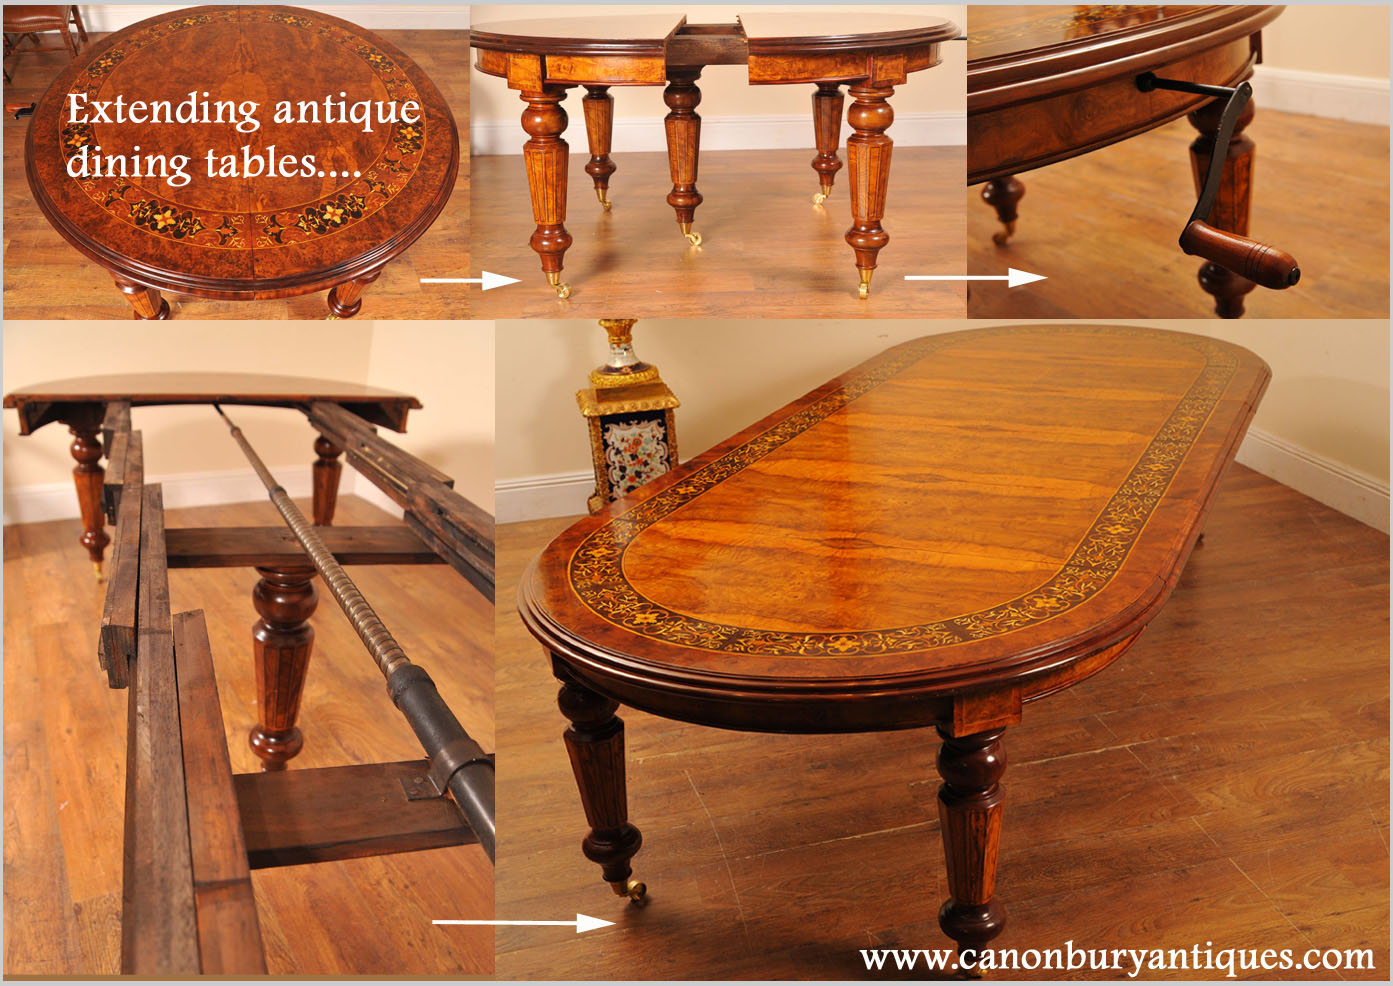 Antique tables that extend via the leaf system